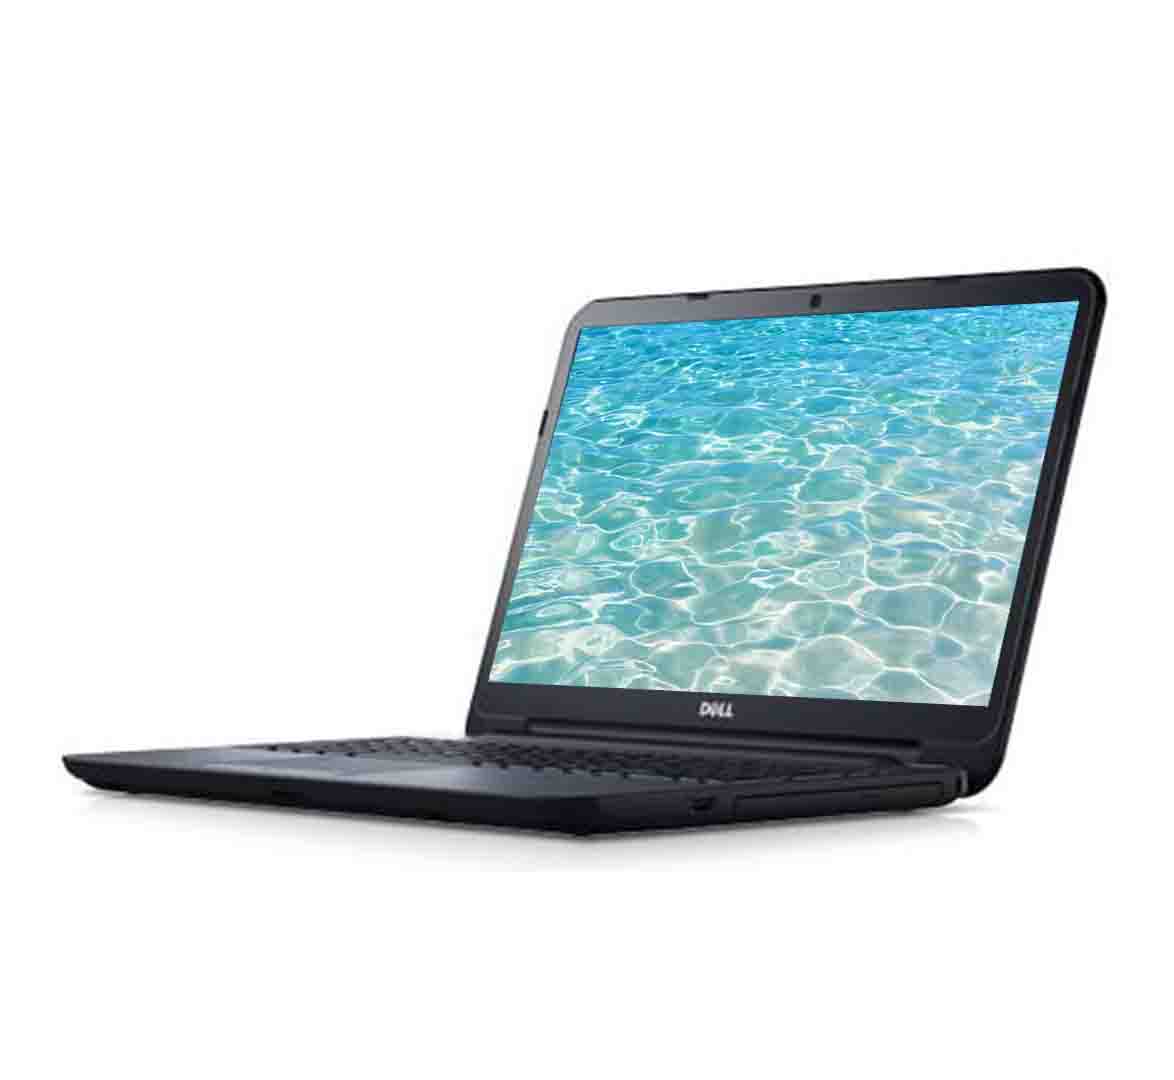 Dell Latitude 3540 Business Laptop, Intel Core i3-4th Generation CPU, 8GB RAM, 500GB HDD, 15.6 inch Display, Windows 10 Pro, Refurbished Laptop